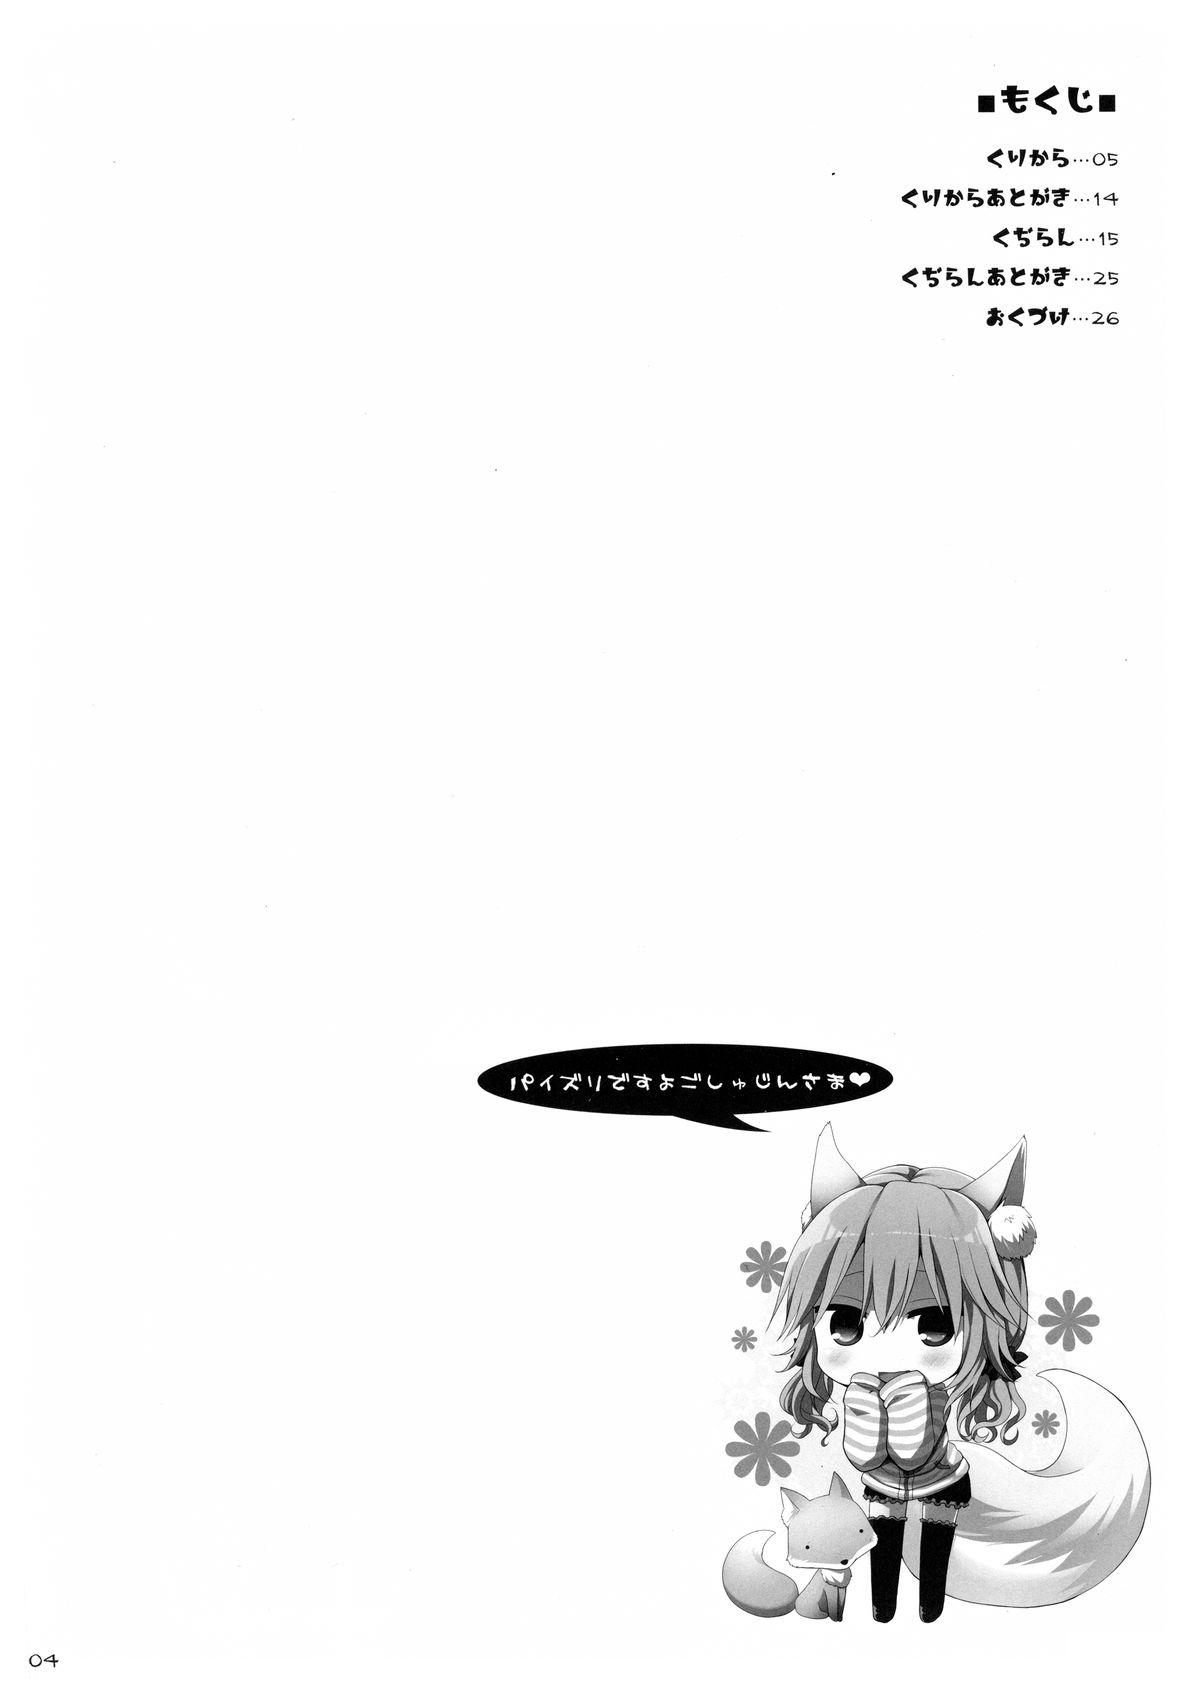 Alt Goshujin-sama Oppai desu yo!! 3 - Fate extra 18 Year Old - Page 3